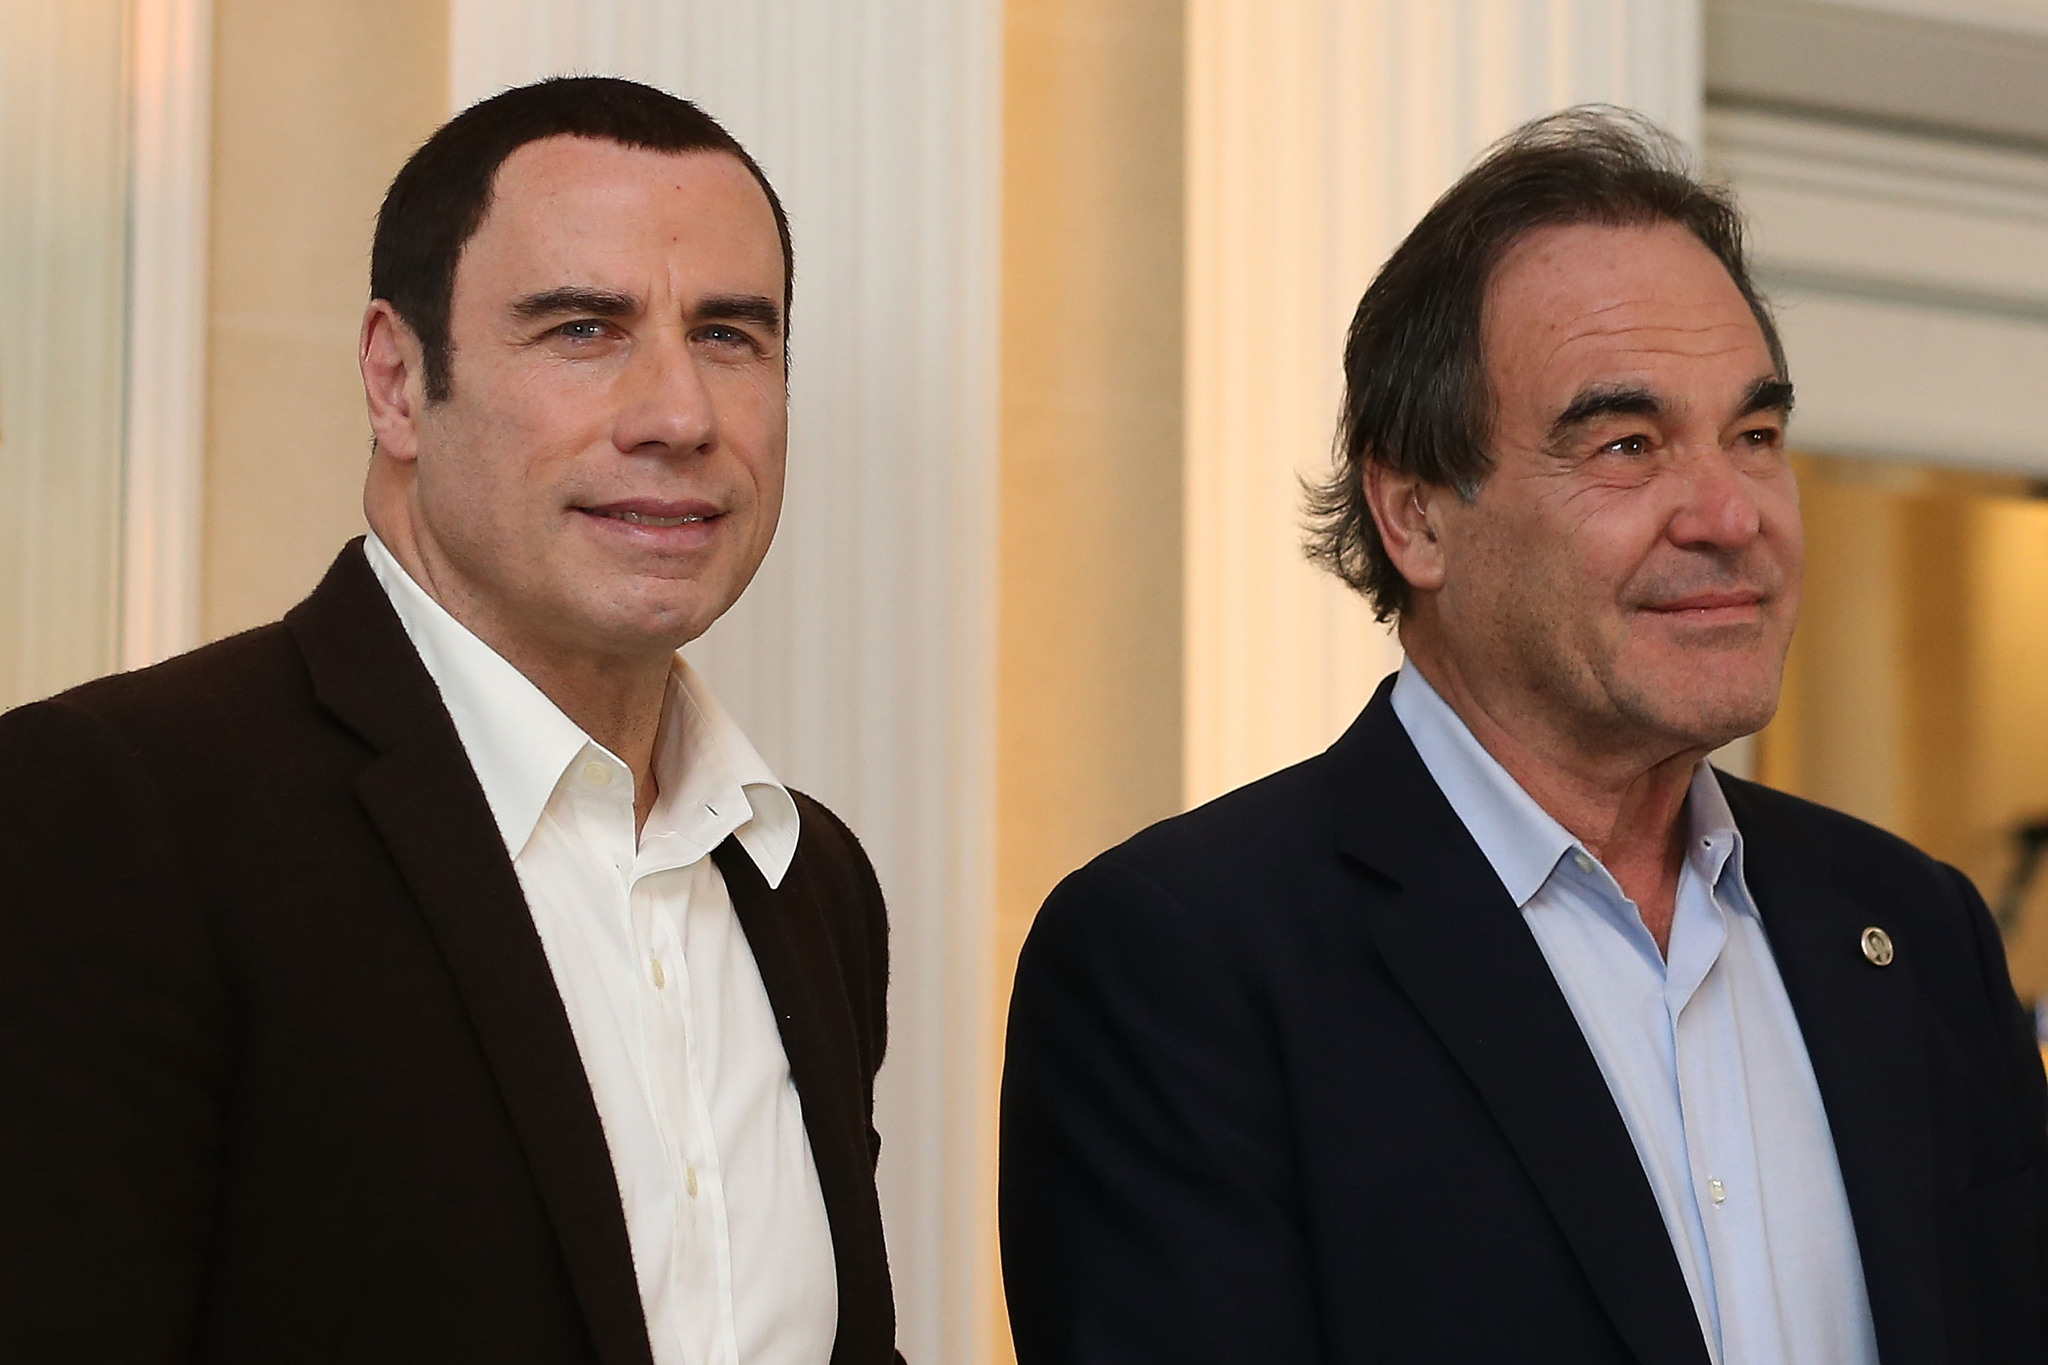 Oliver Stone and John Travolta at event of Laukiniai (2012)